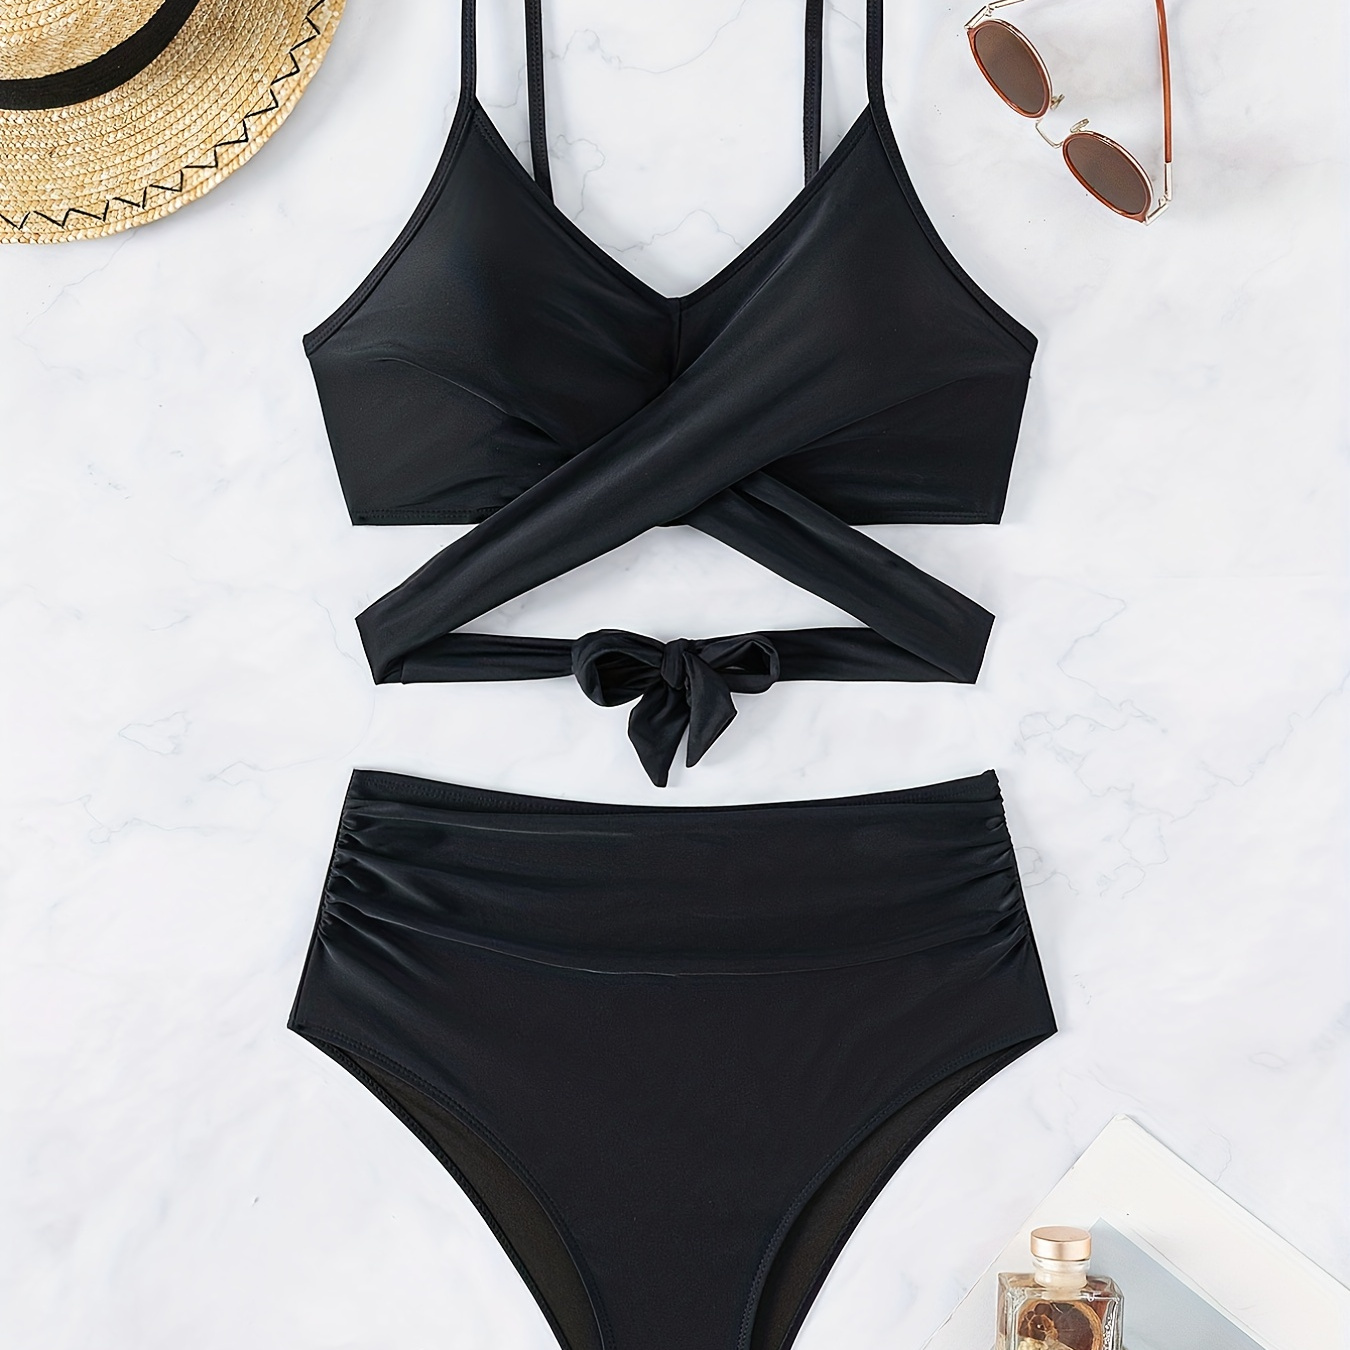 

Criss Cross Solid Black 2 Piece Set Bikini, Tie Back High Waist Ruched Tummy Control Swimsuits, Women's Swimwear & Clothing